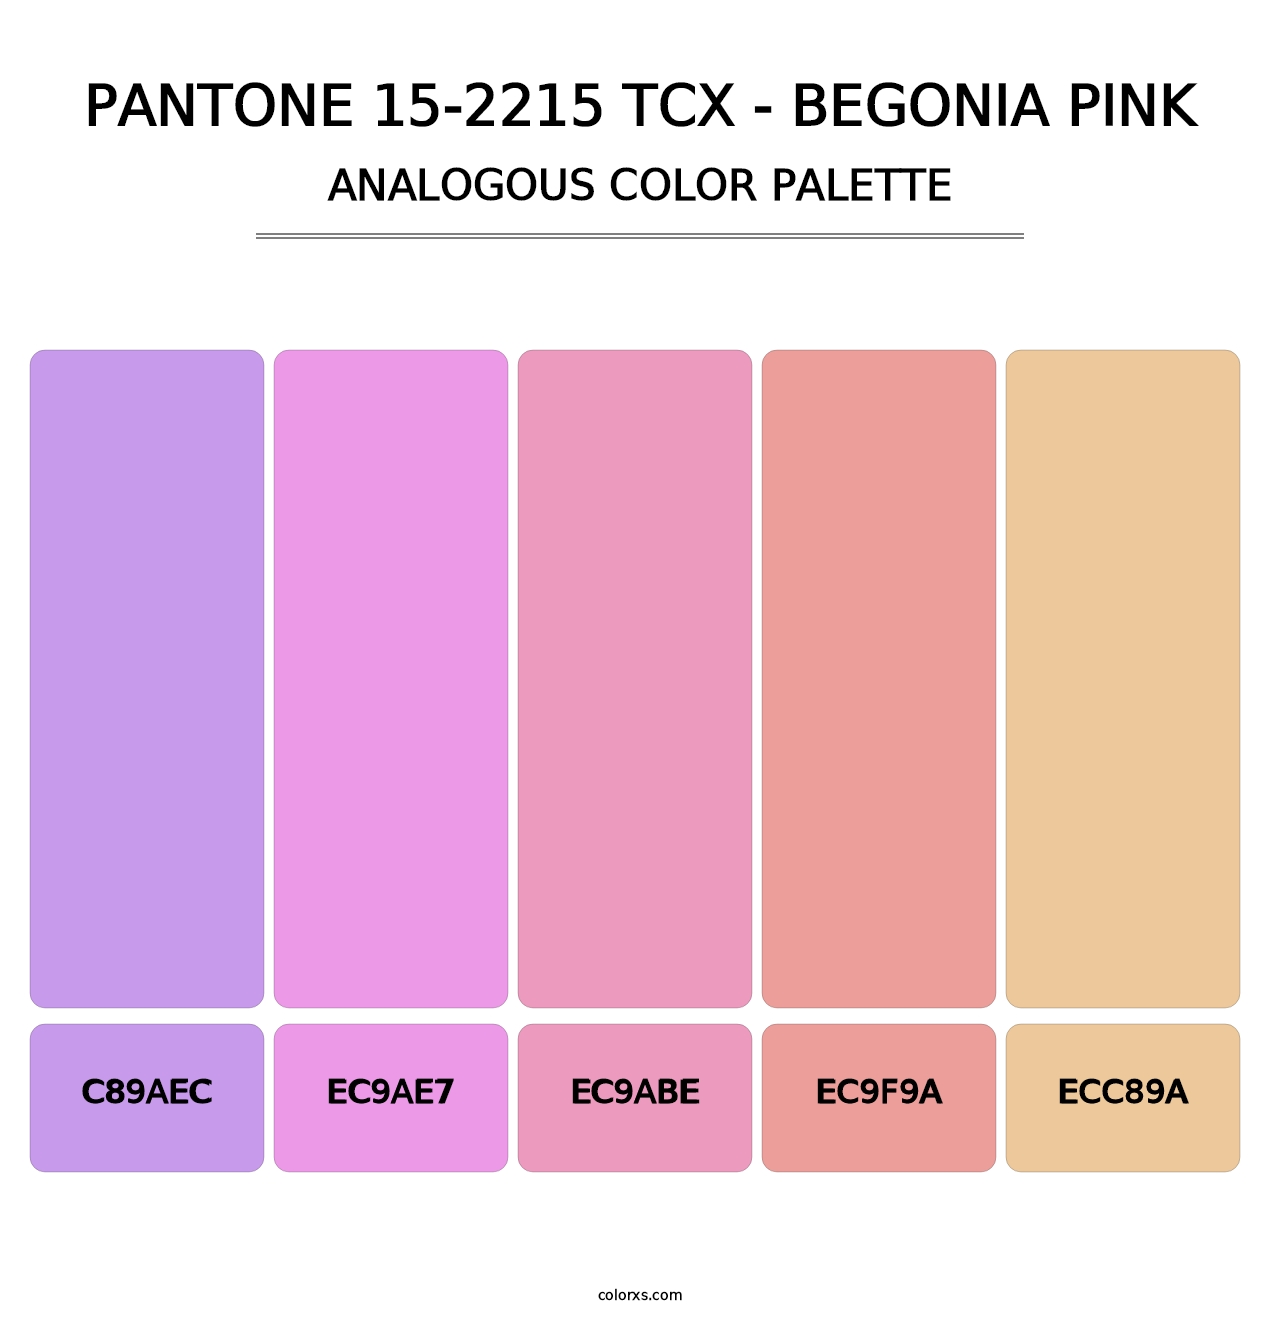 PANTONE 15-2215 TCX - Begonia Pink - Analogous Color Palette